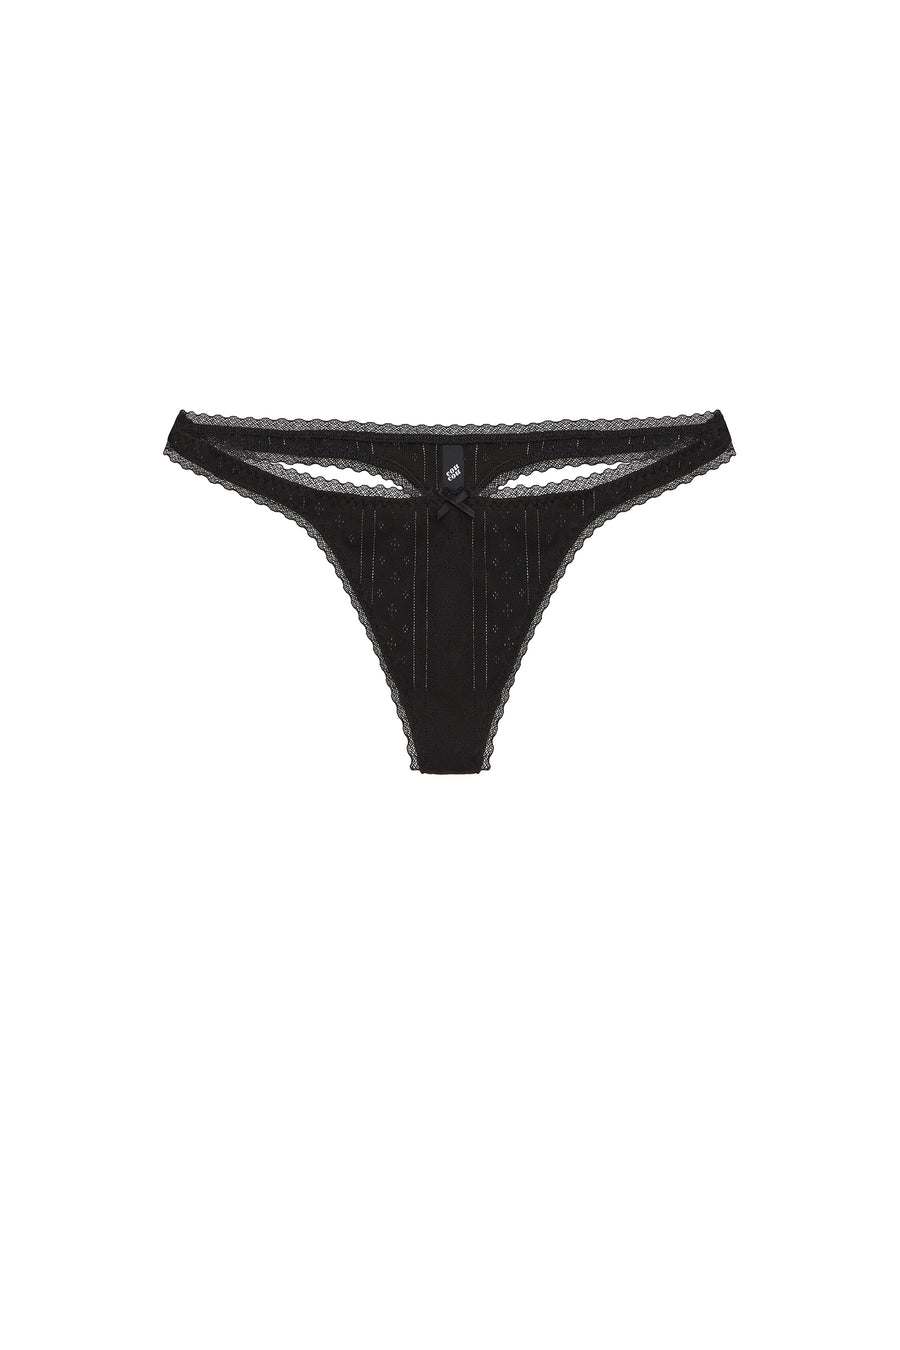 The Thong: Pointelle Cotton Black – Cou Cou Intimates